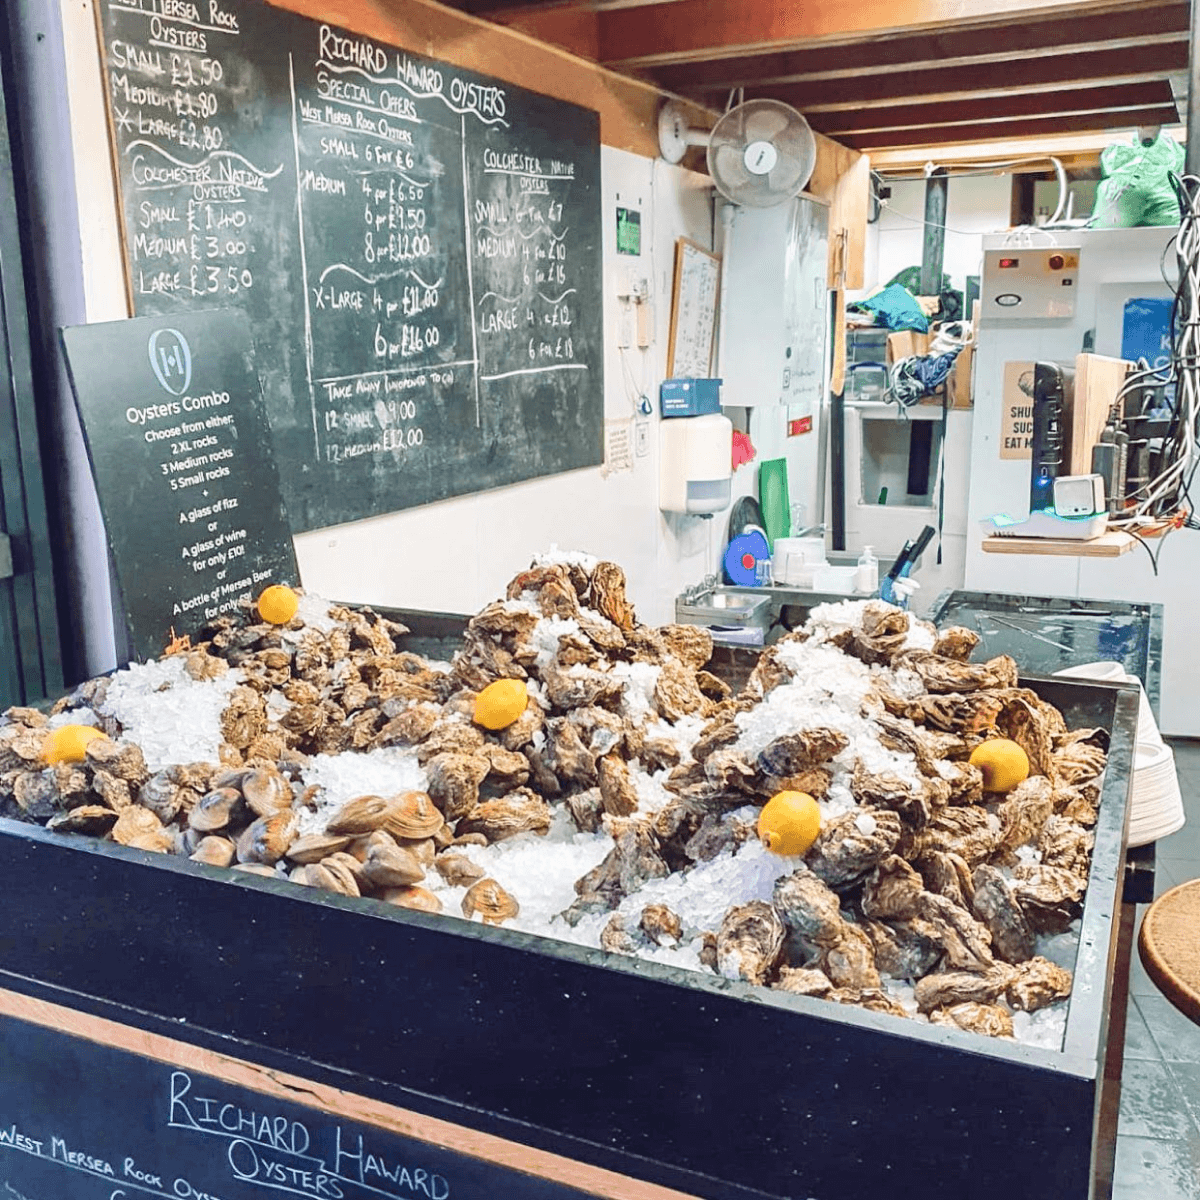 must-visit london restaurants_hungrygowhere_richard hawards oysters